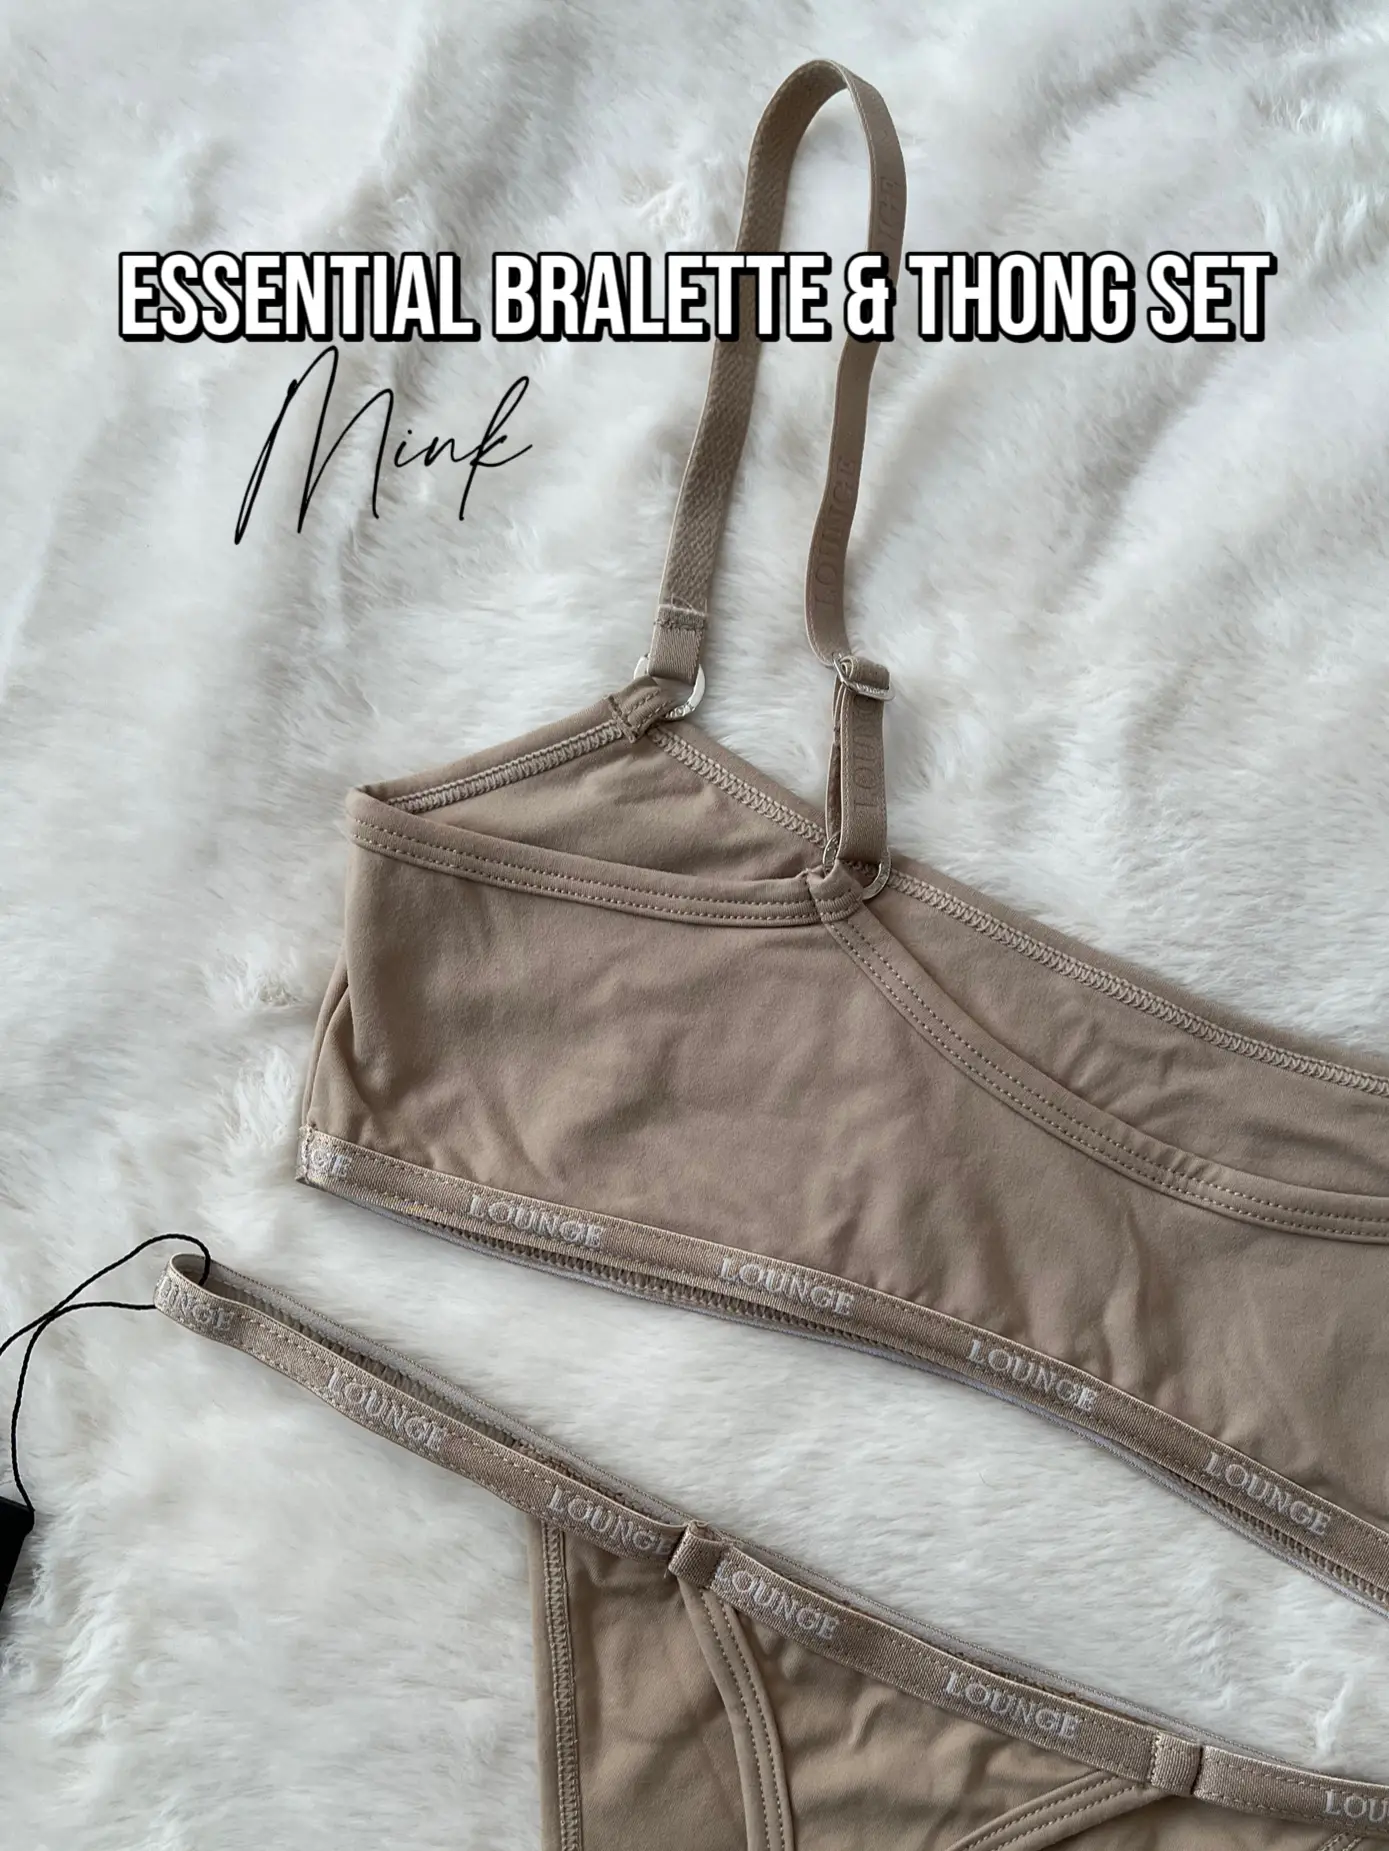 Bralettes & Lace Bralettes  Lounge – Lounge Underwear